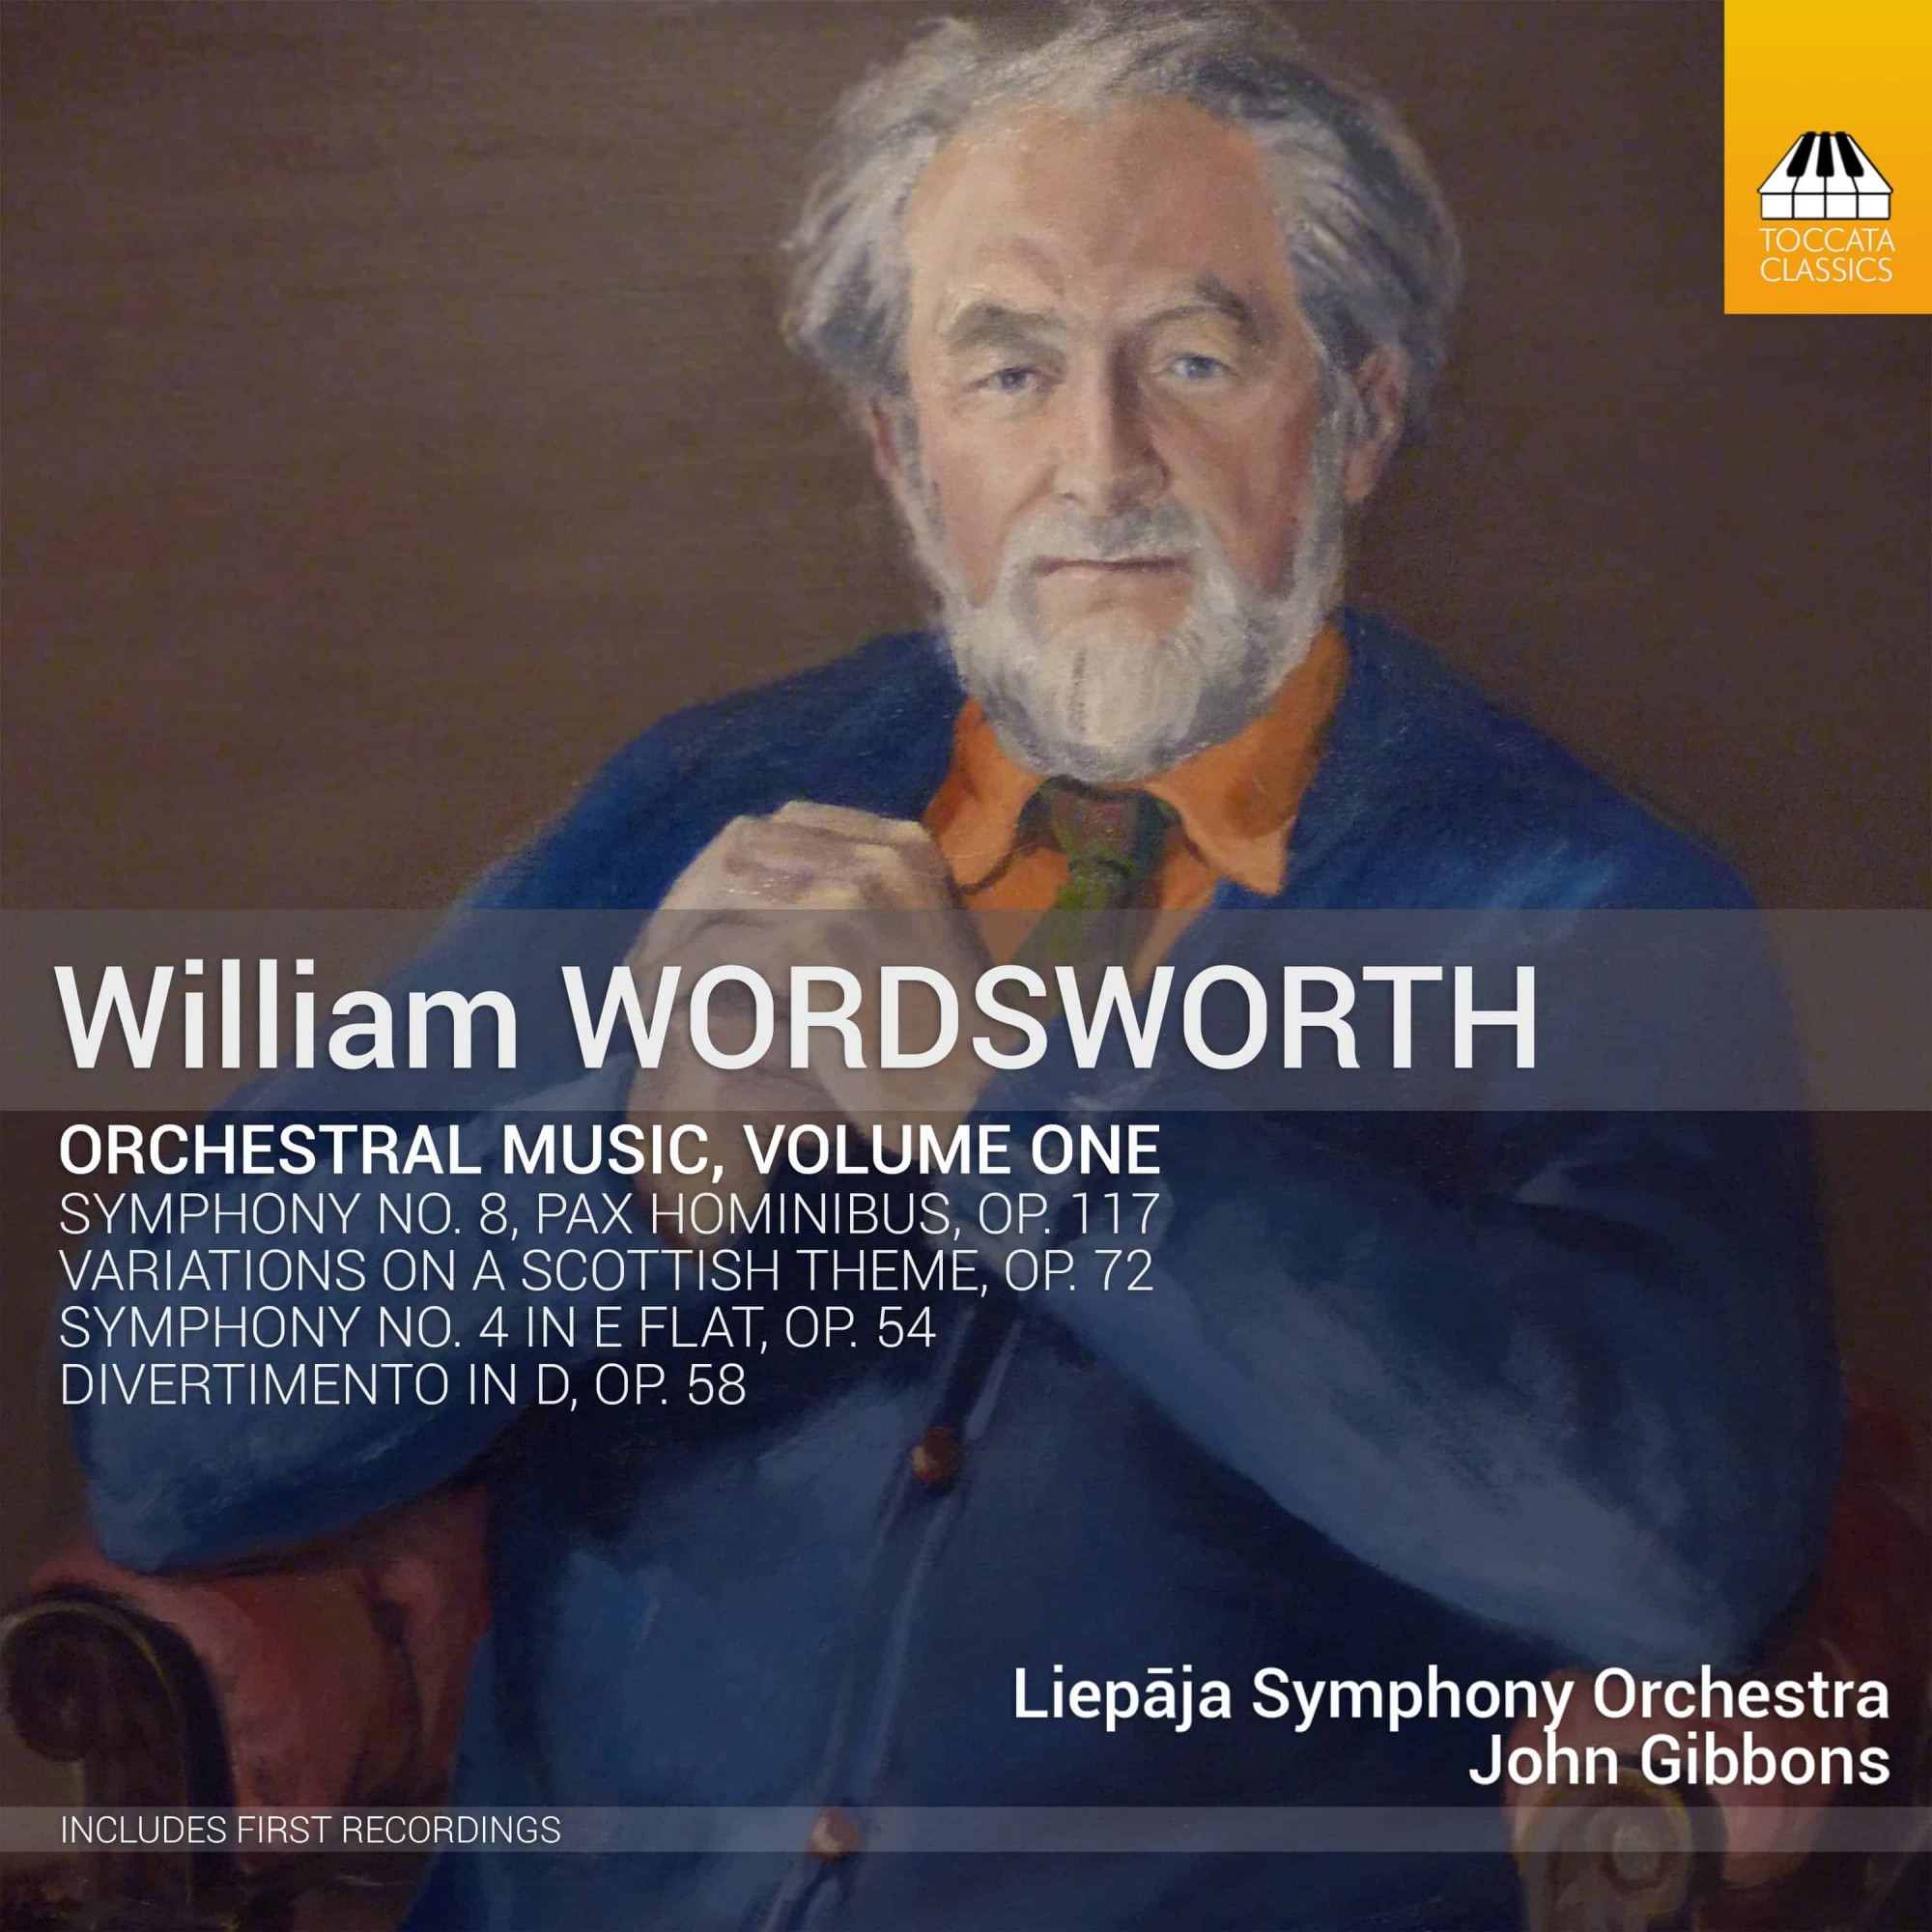 WILLIAM WORDSWORTH: ORCHESTRAL MUSIC, VOLUME ONE